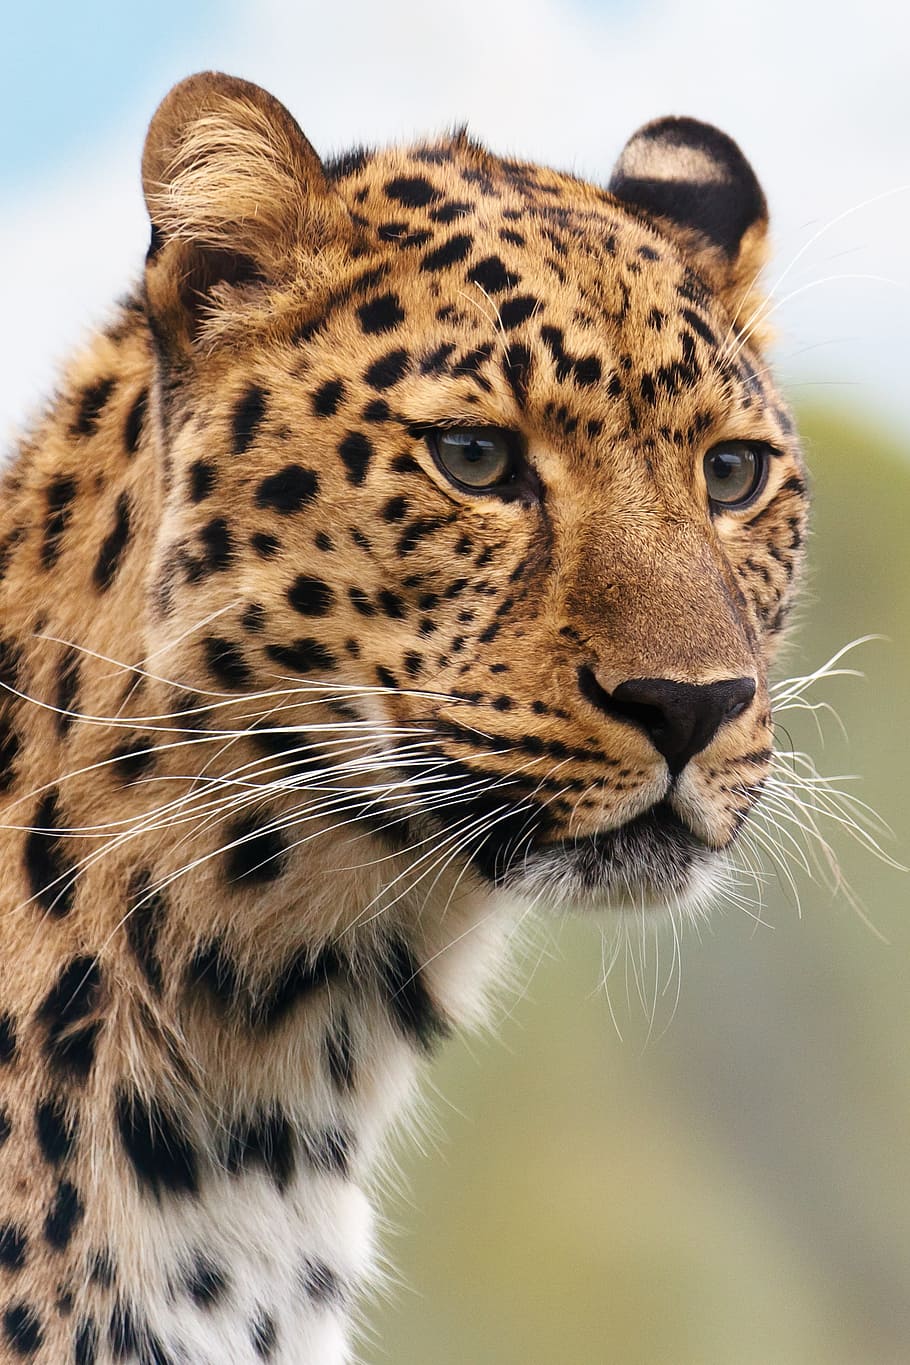 fotografi macan tutul, siang hari, cheetah, macan tutul, hewan, besar, karnivora, kucing, berbahaya, pemburu